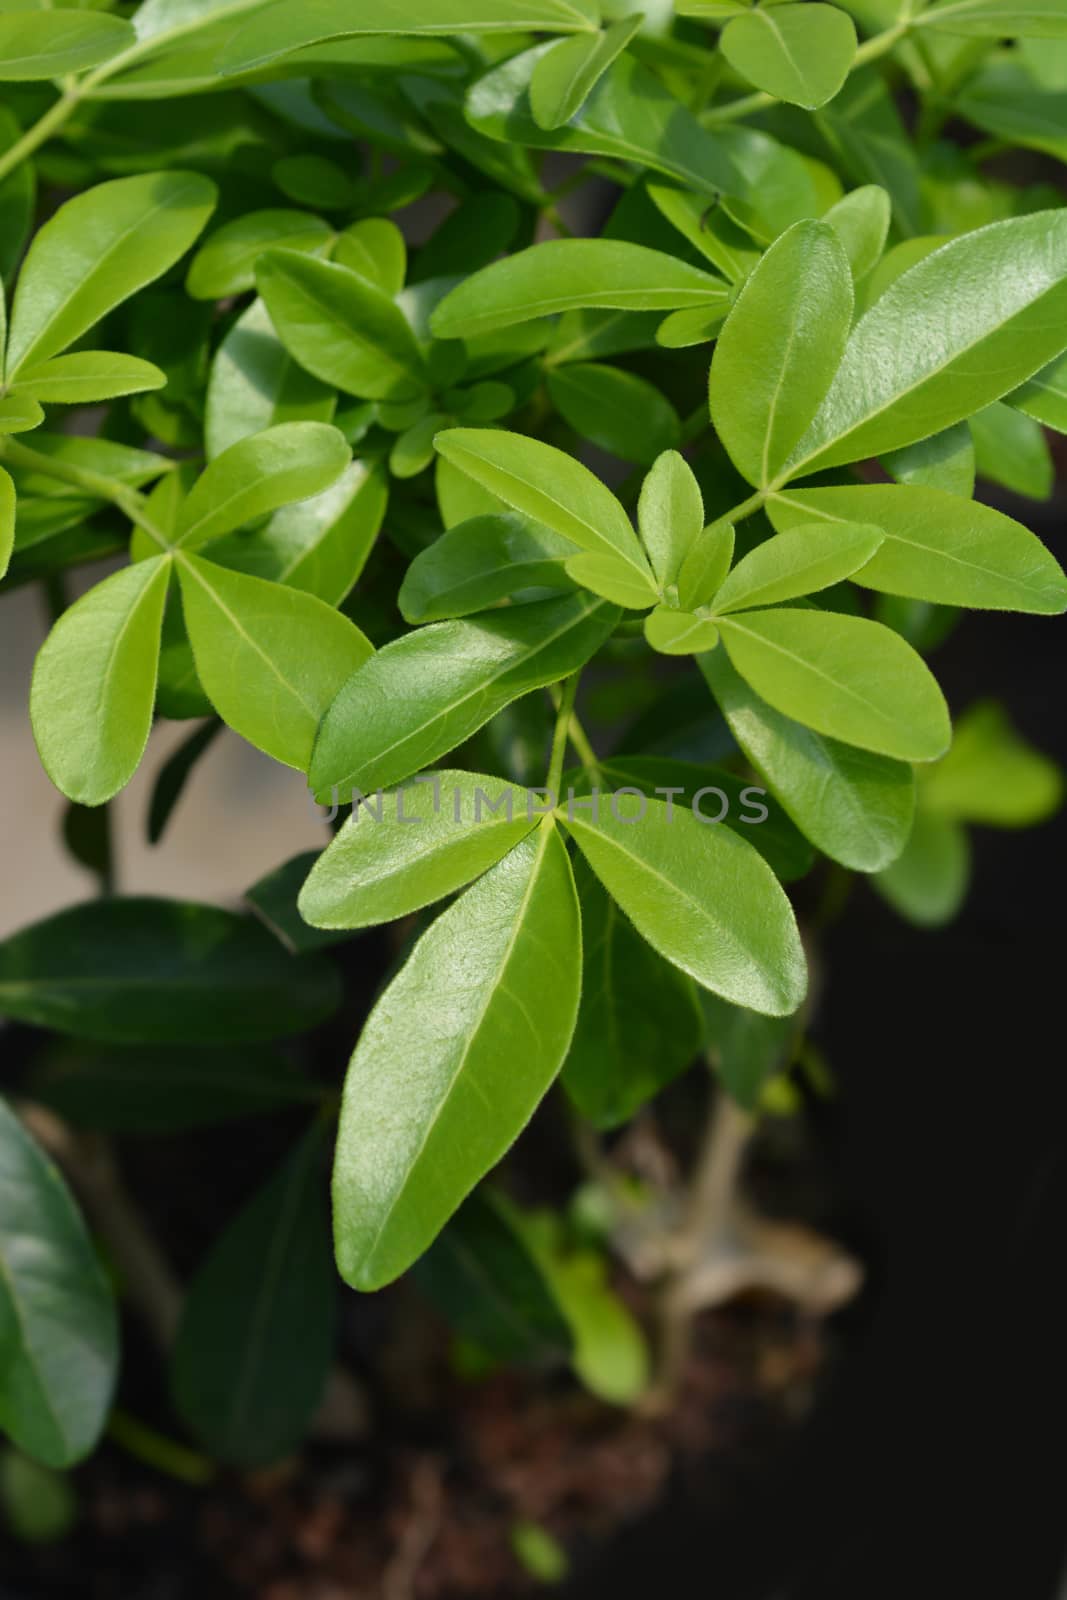 Mexican orange leaves - Latin name - Choisya ternata